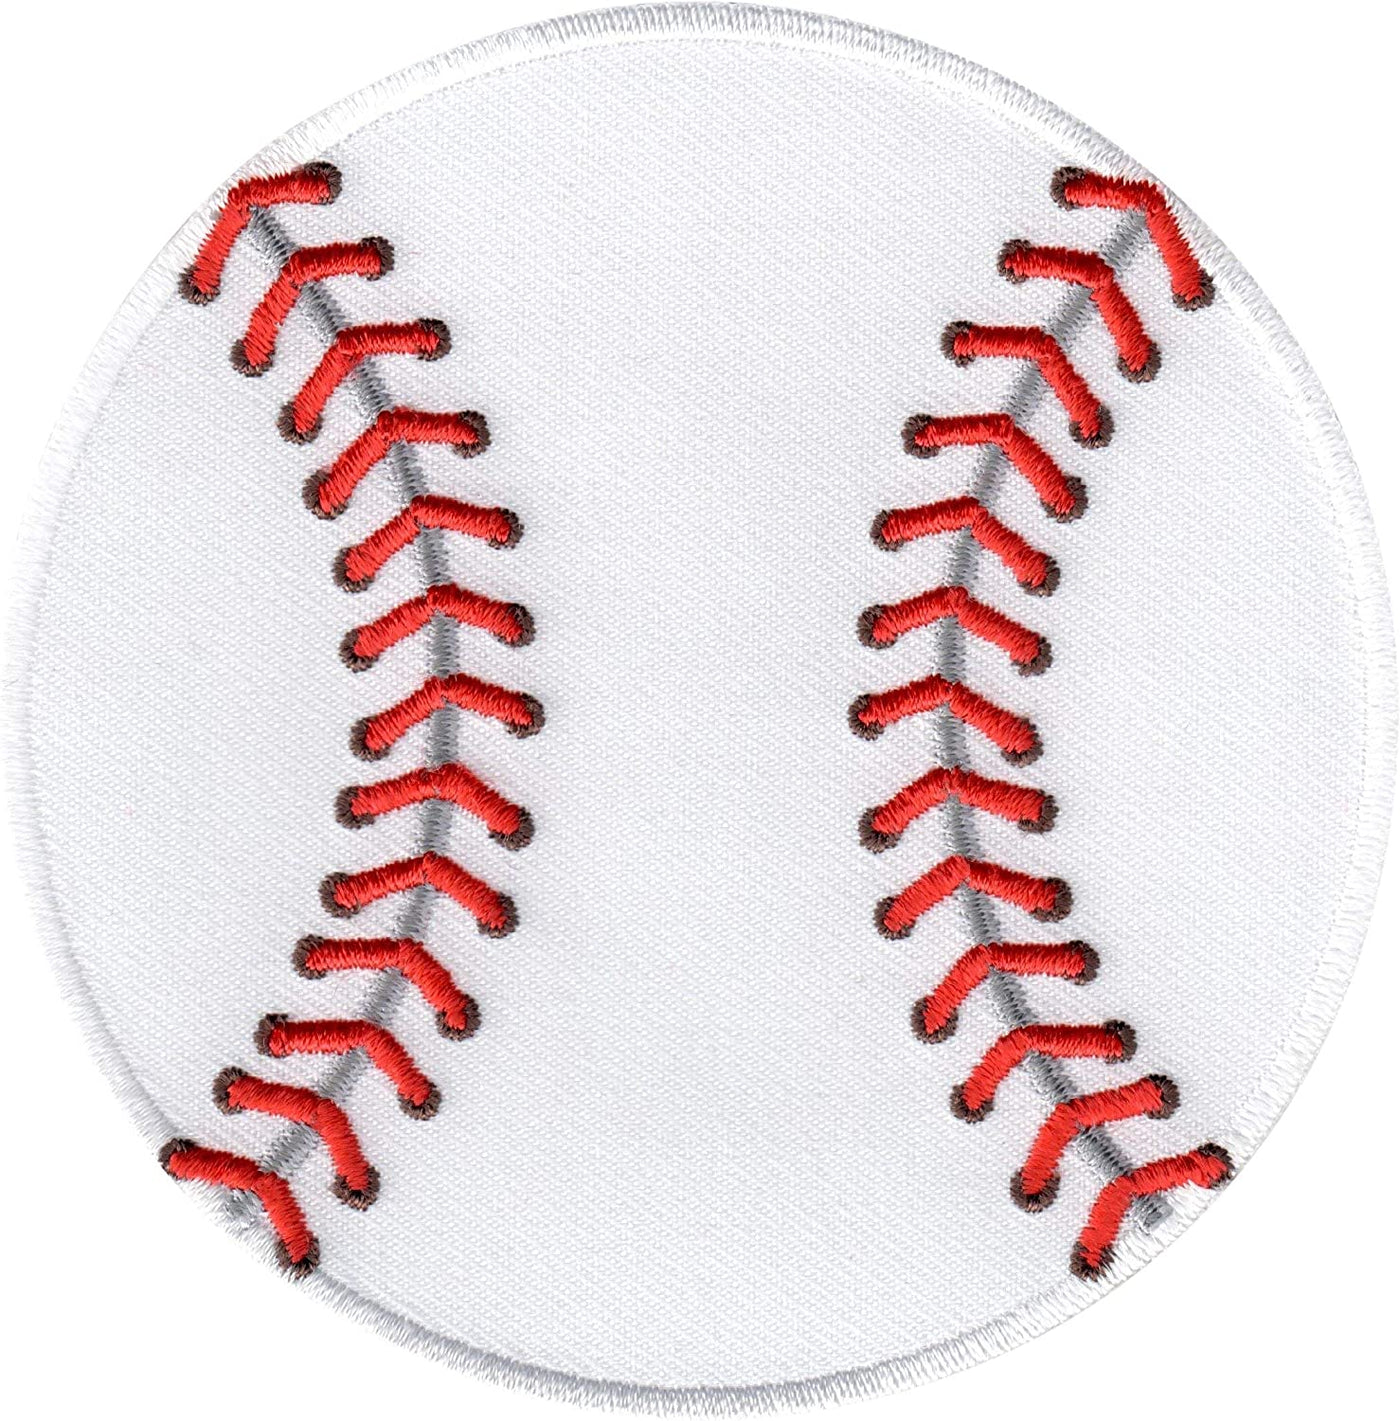 baseball-custom-patch-the-shameless-collection